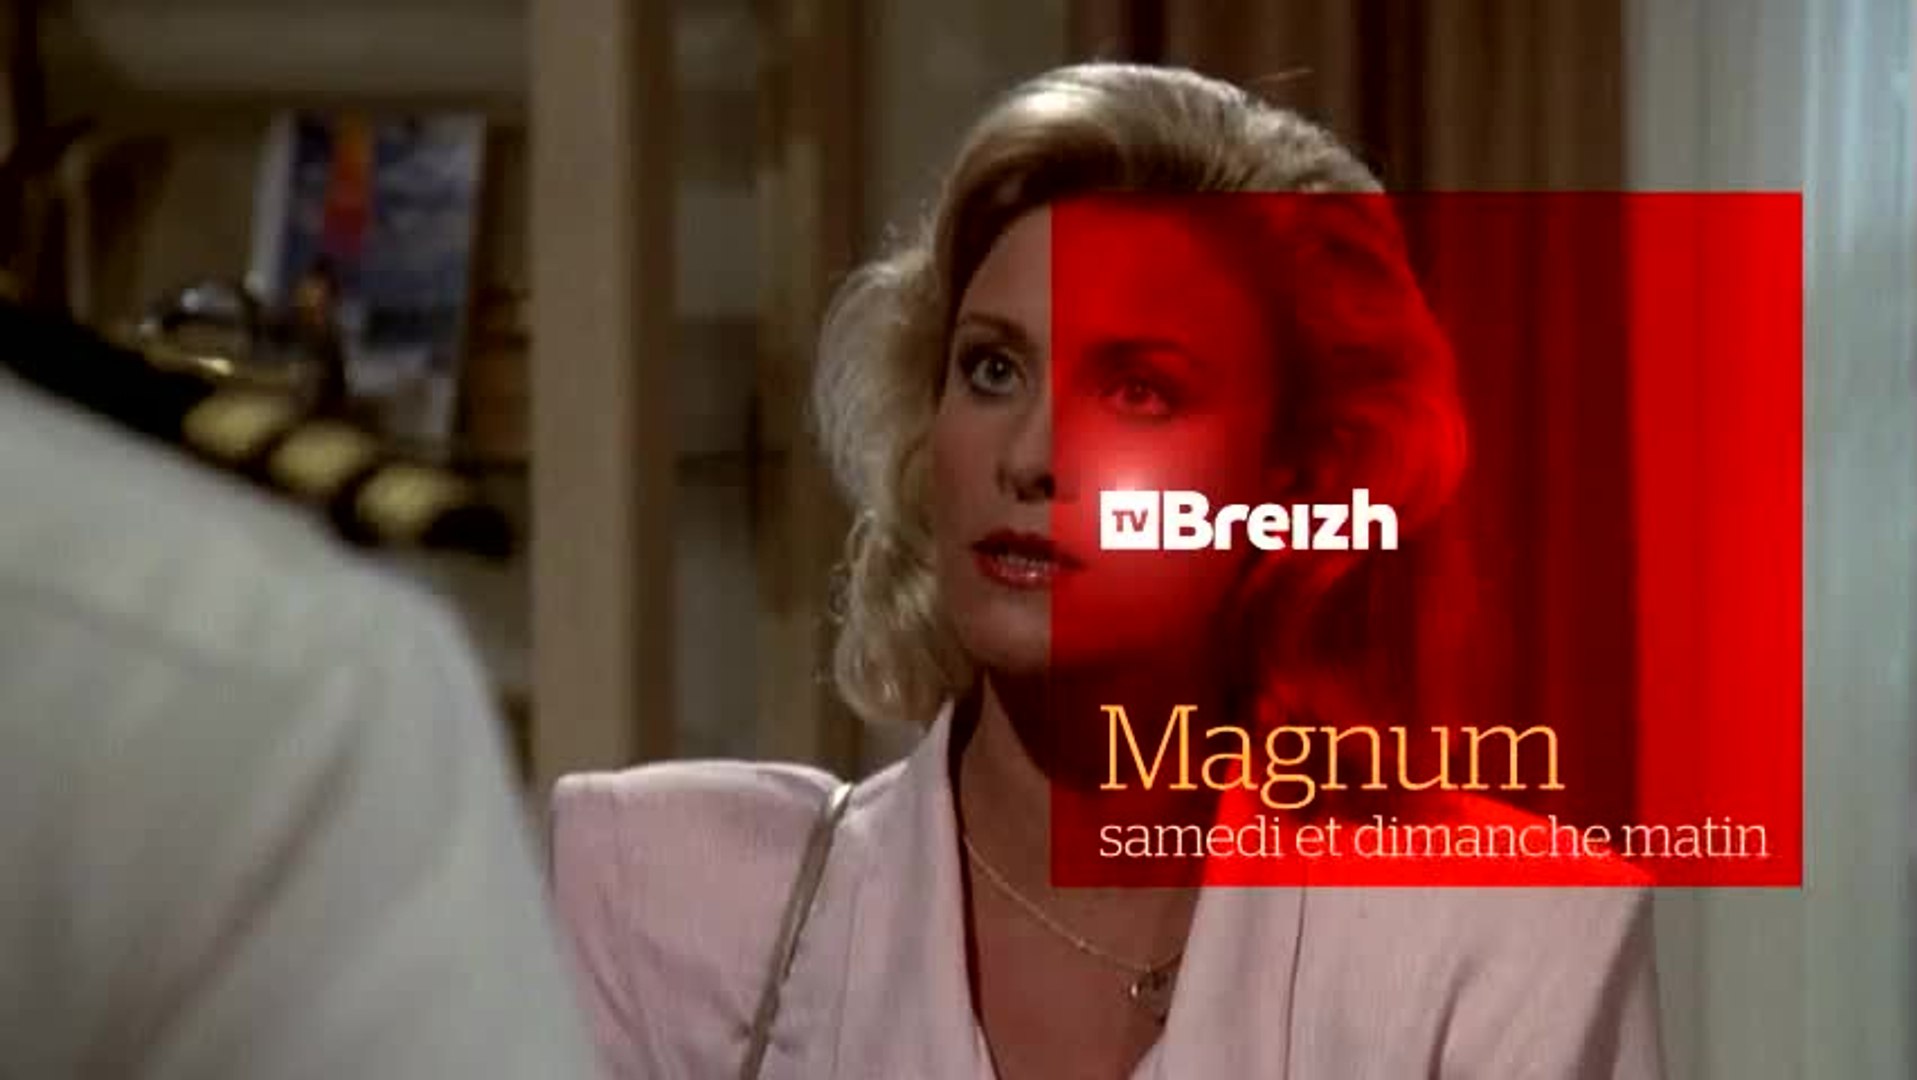 Magnum - TV Breizh - Vidéo Dailymotion